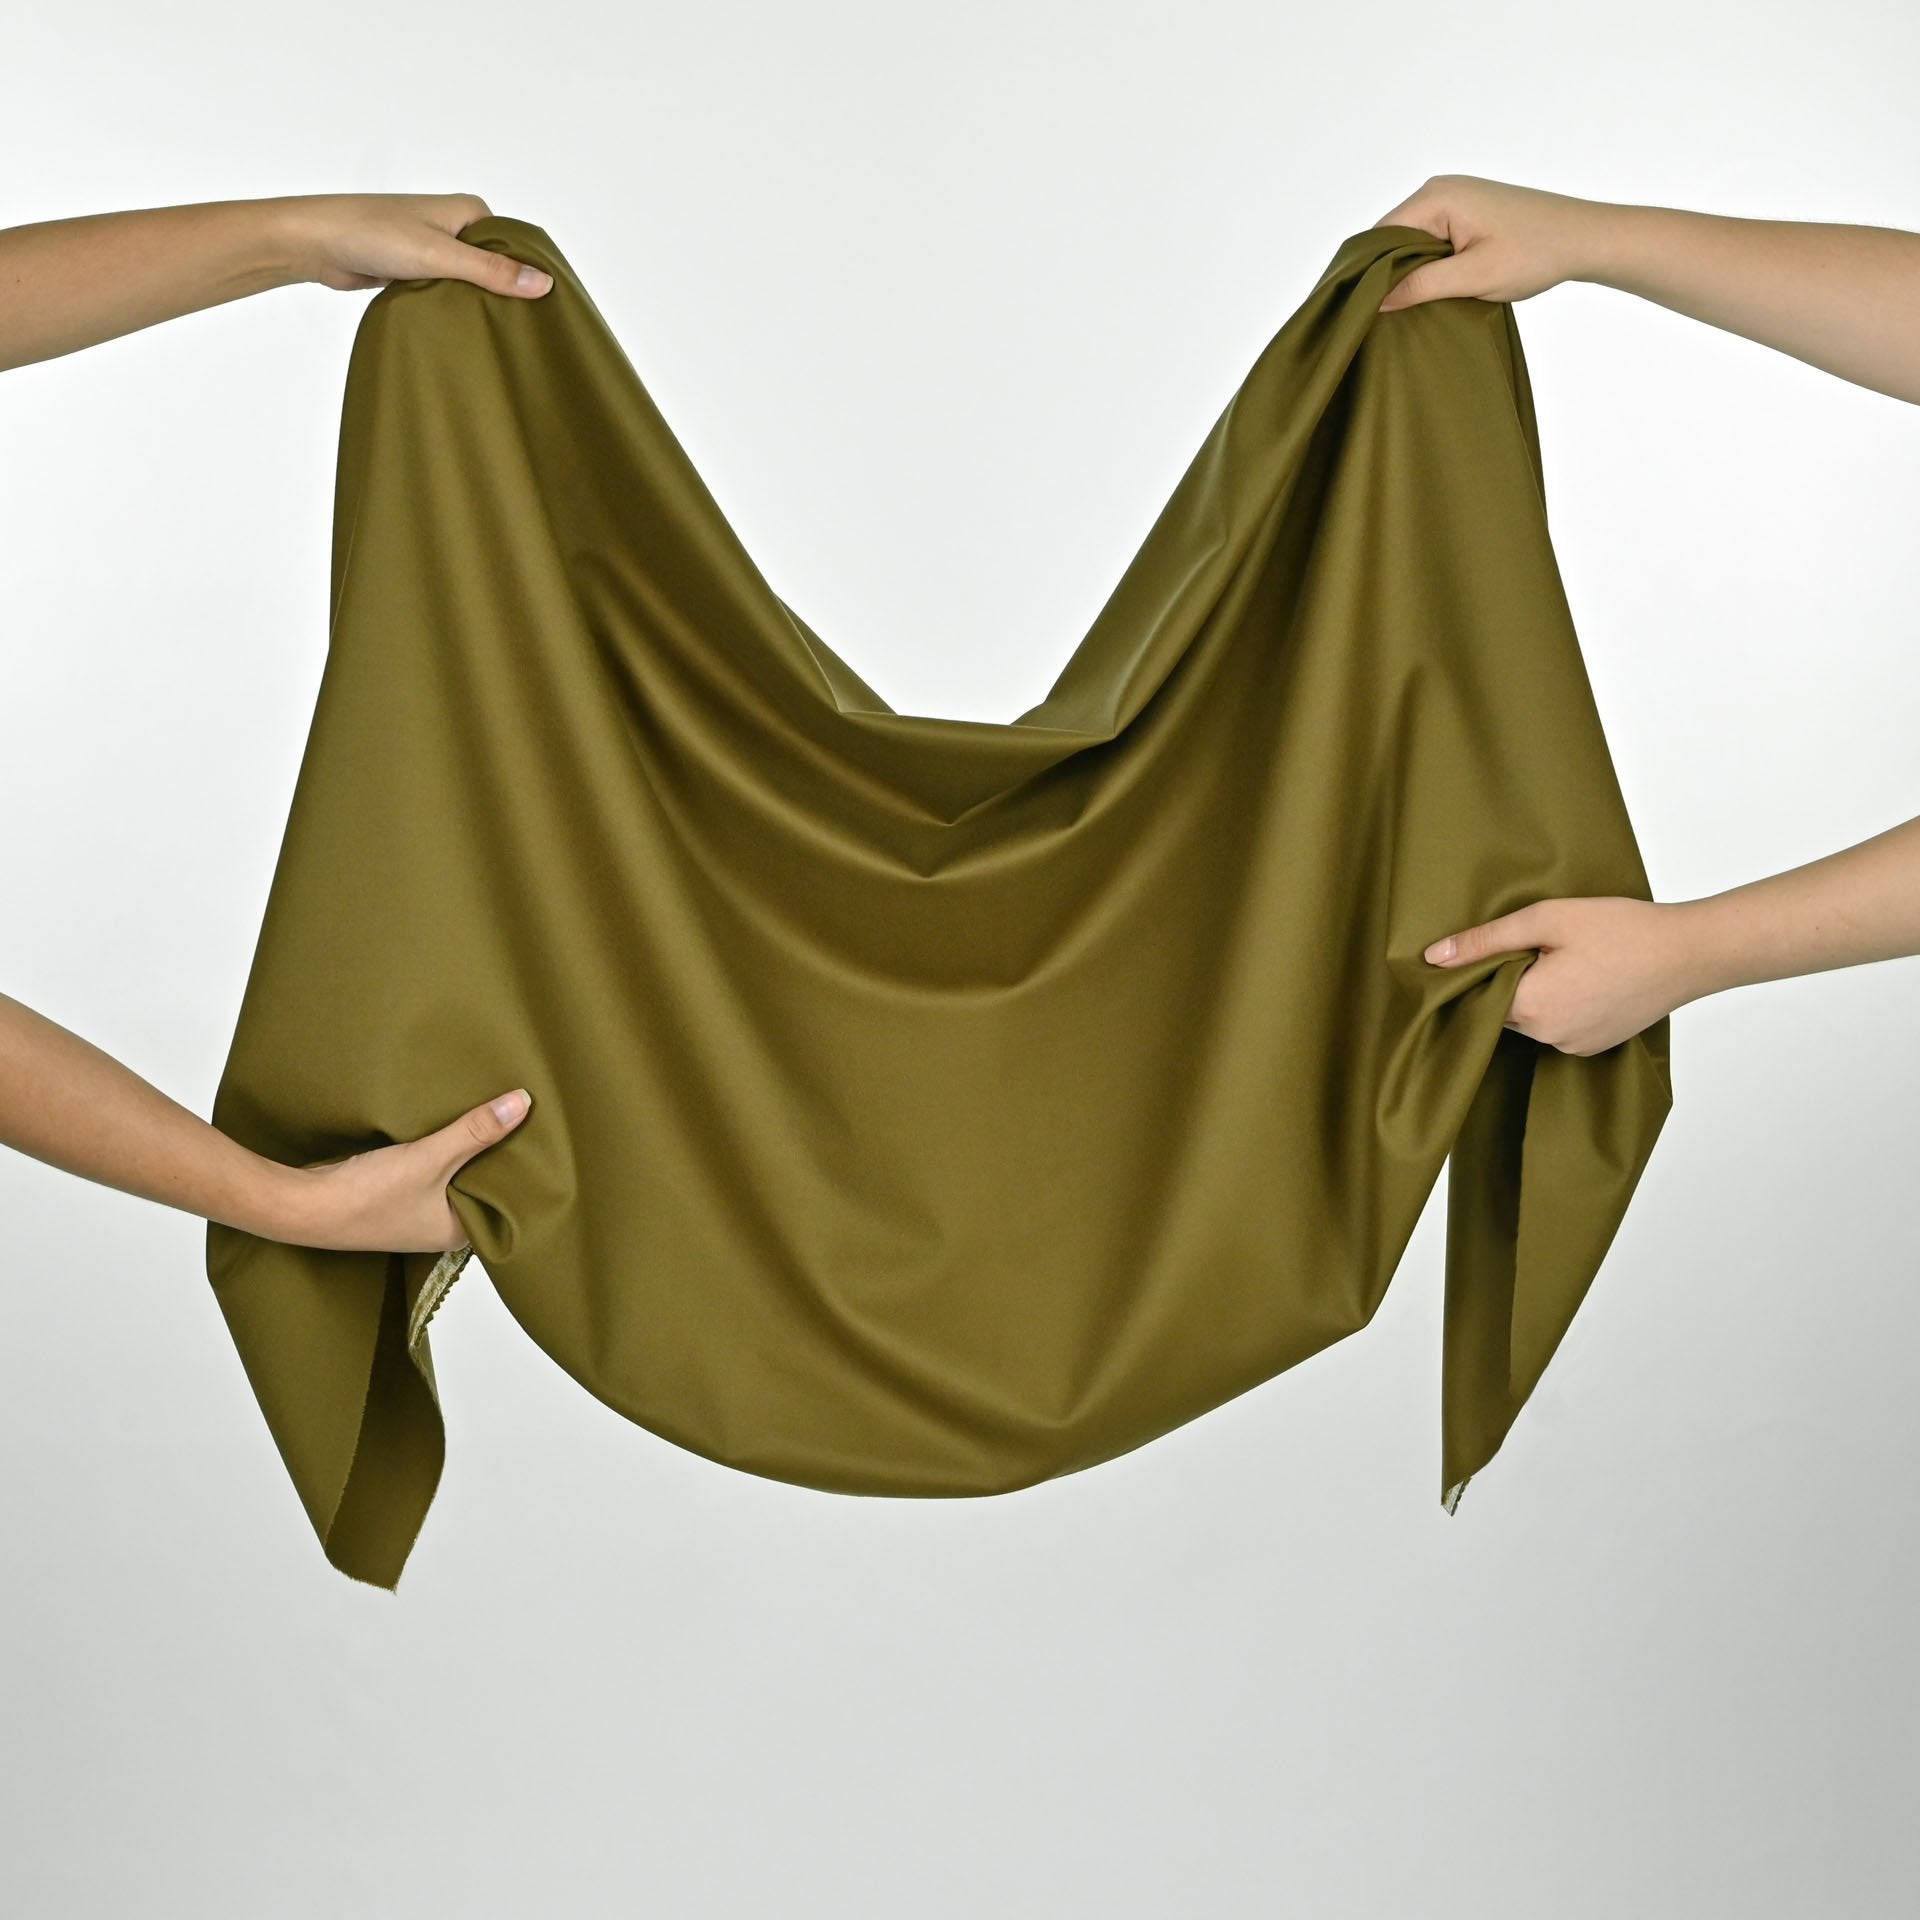 Green Flannel Twill Fabric 97709